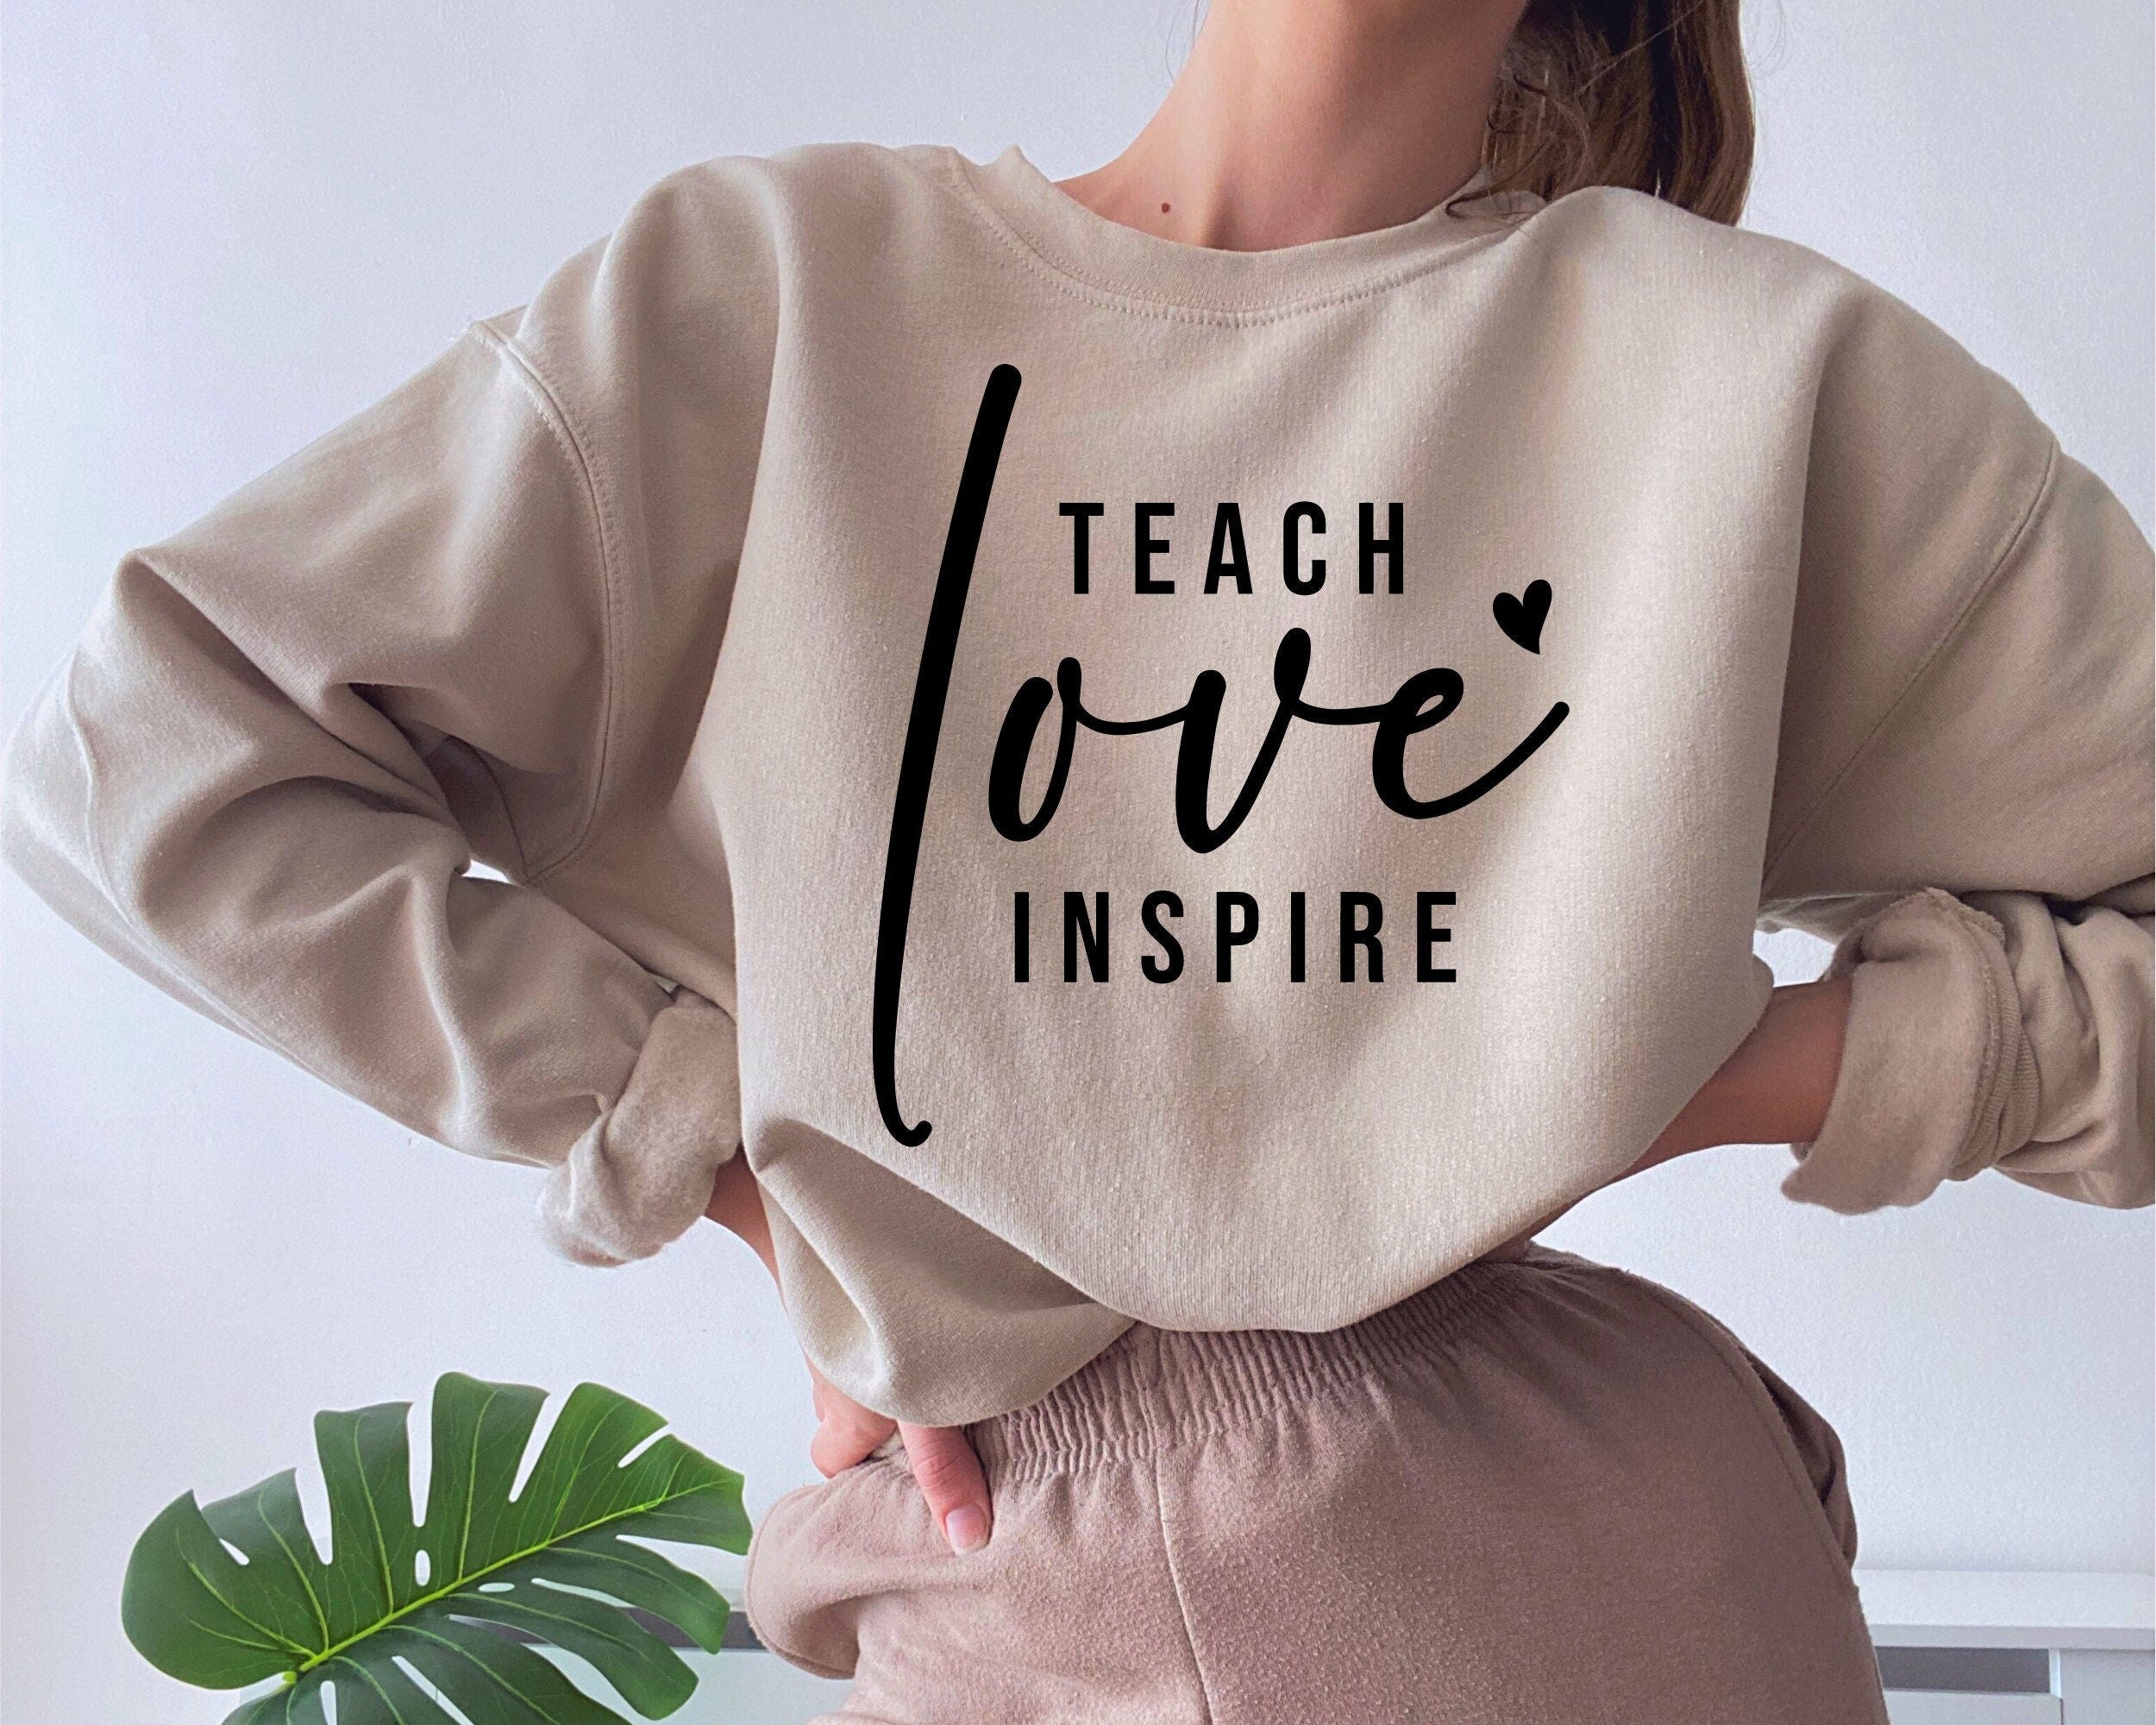 Teach Love Inspire Svg, Teacher Svg, Inspirational Svg, Teacher Quotes Svg, Teacher Shirt Svg, Inspirational Quotes Svg Cut File